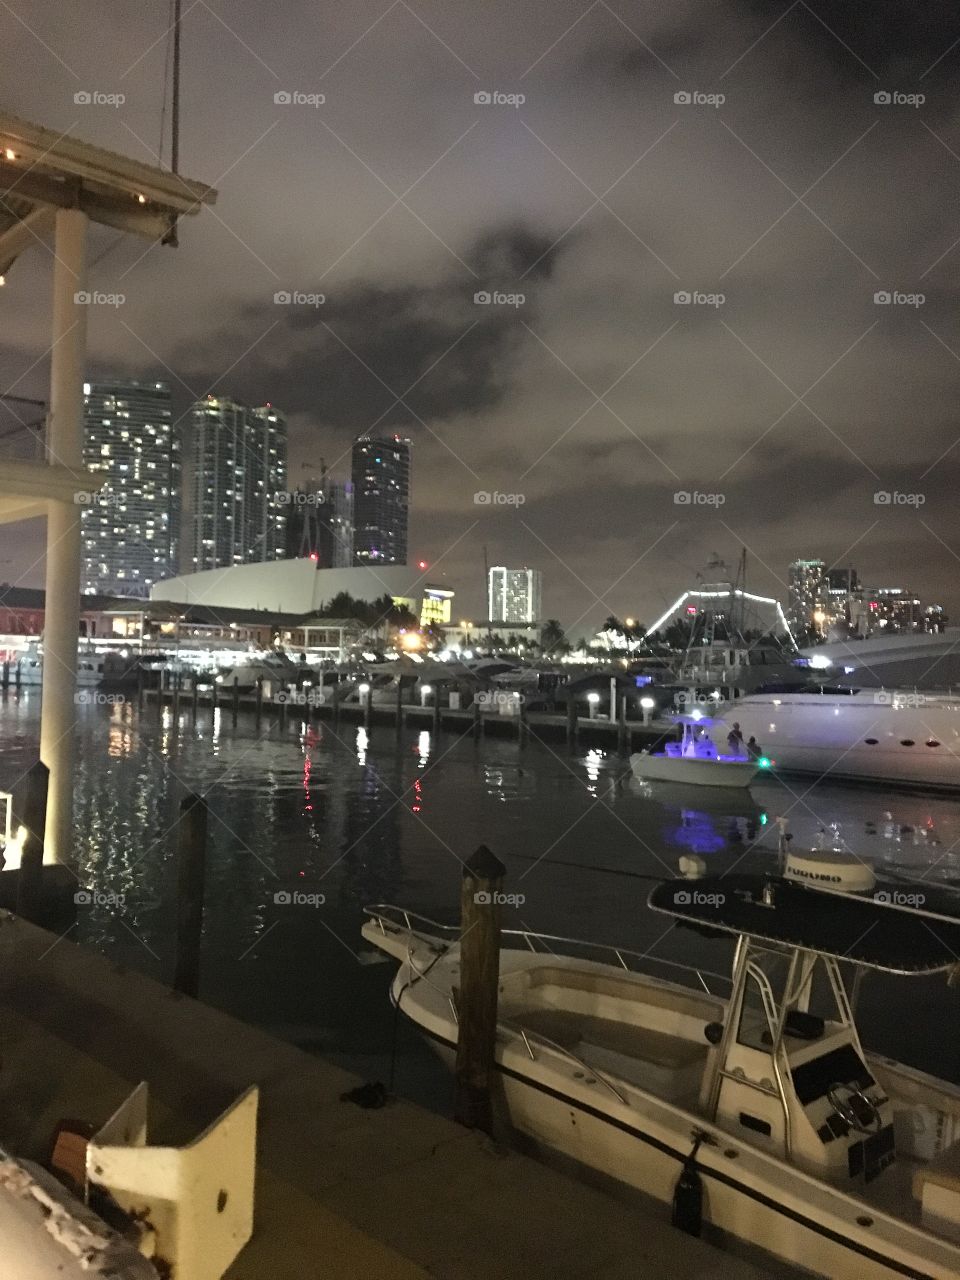 Miami at night 